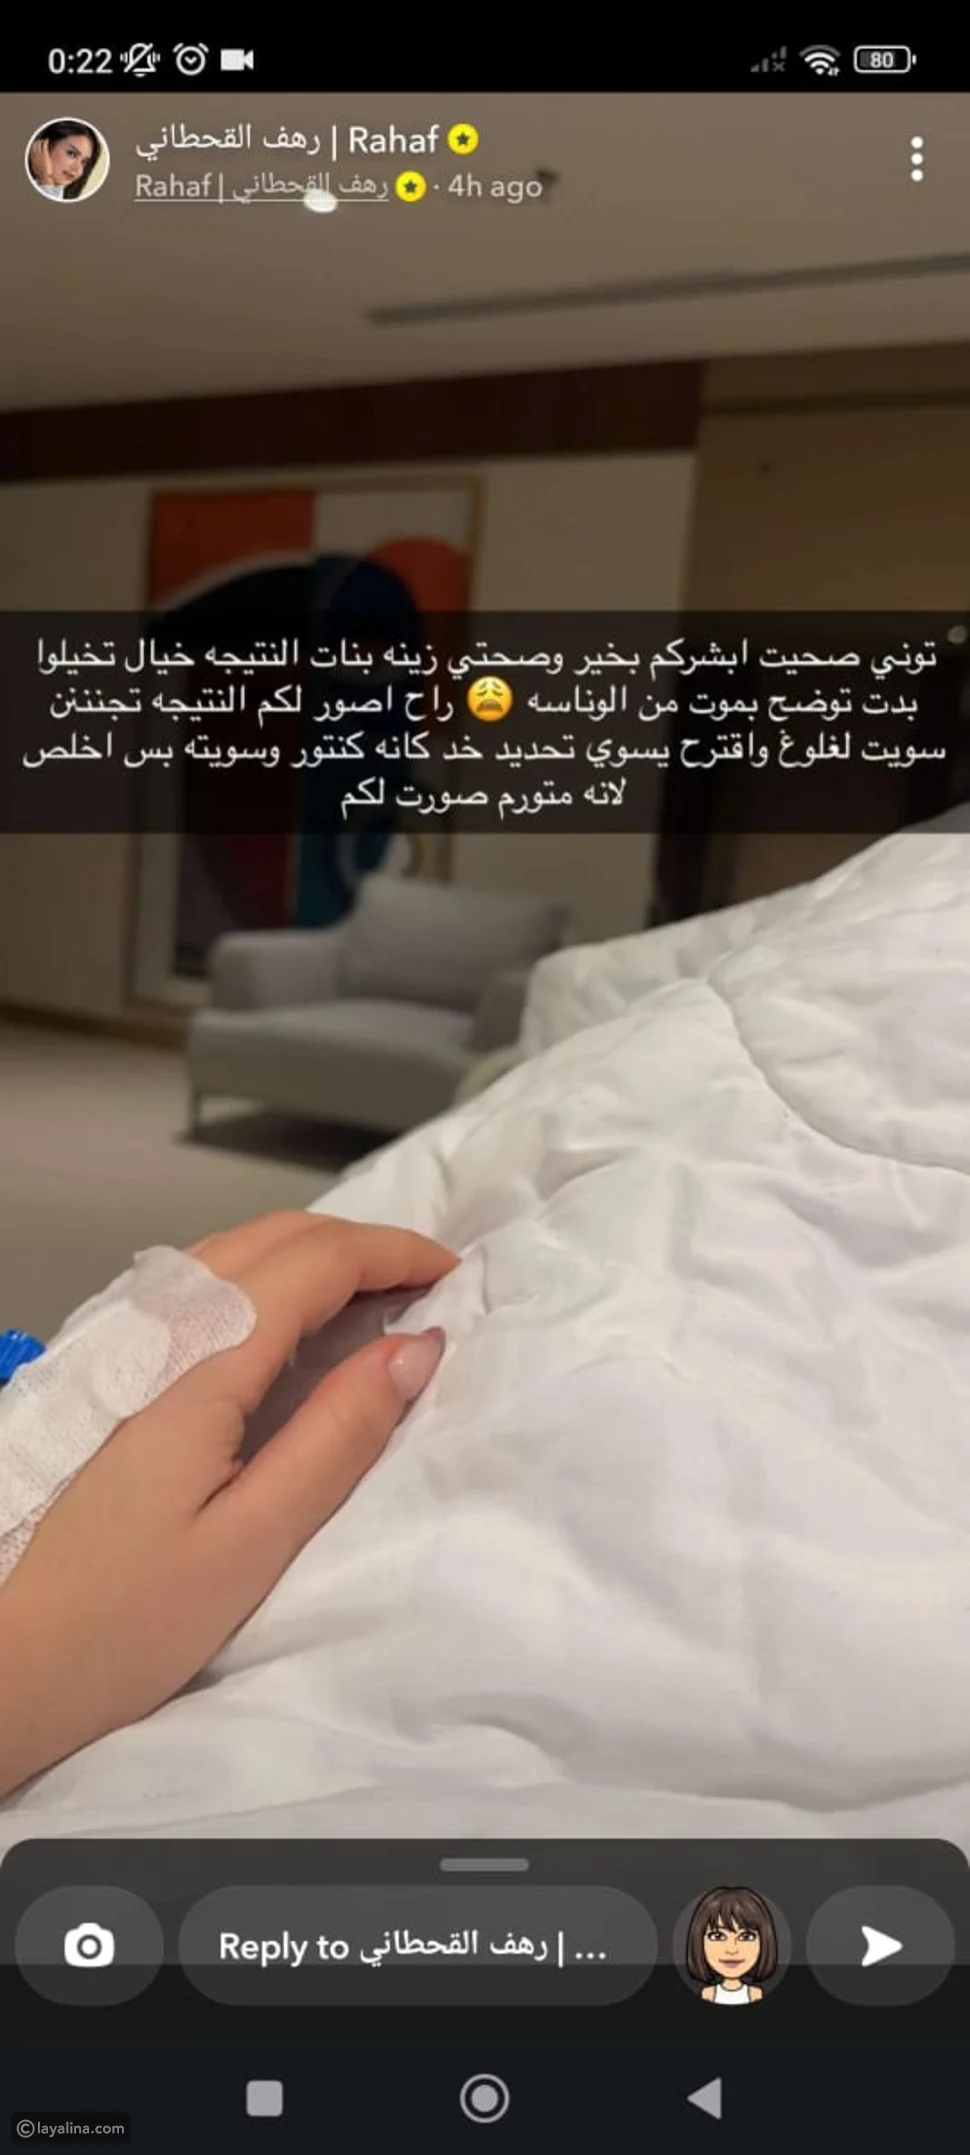 رهف القحطاني اللغلوغ قاهرني والله مكبرني يا بنات